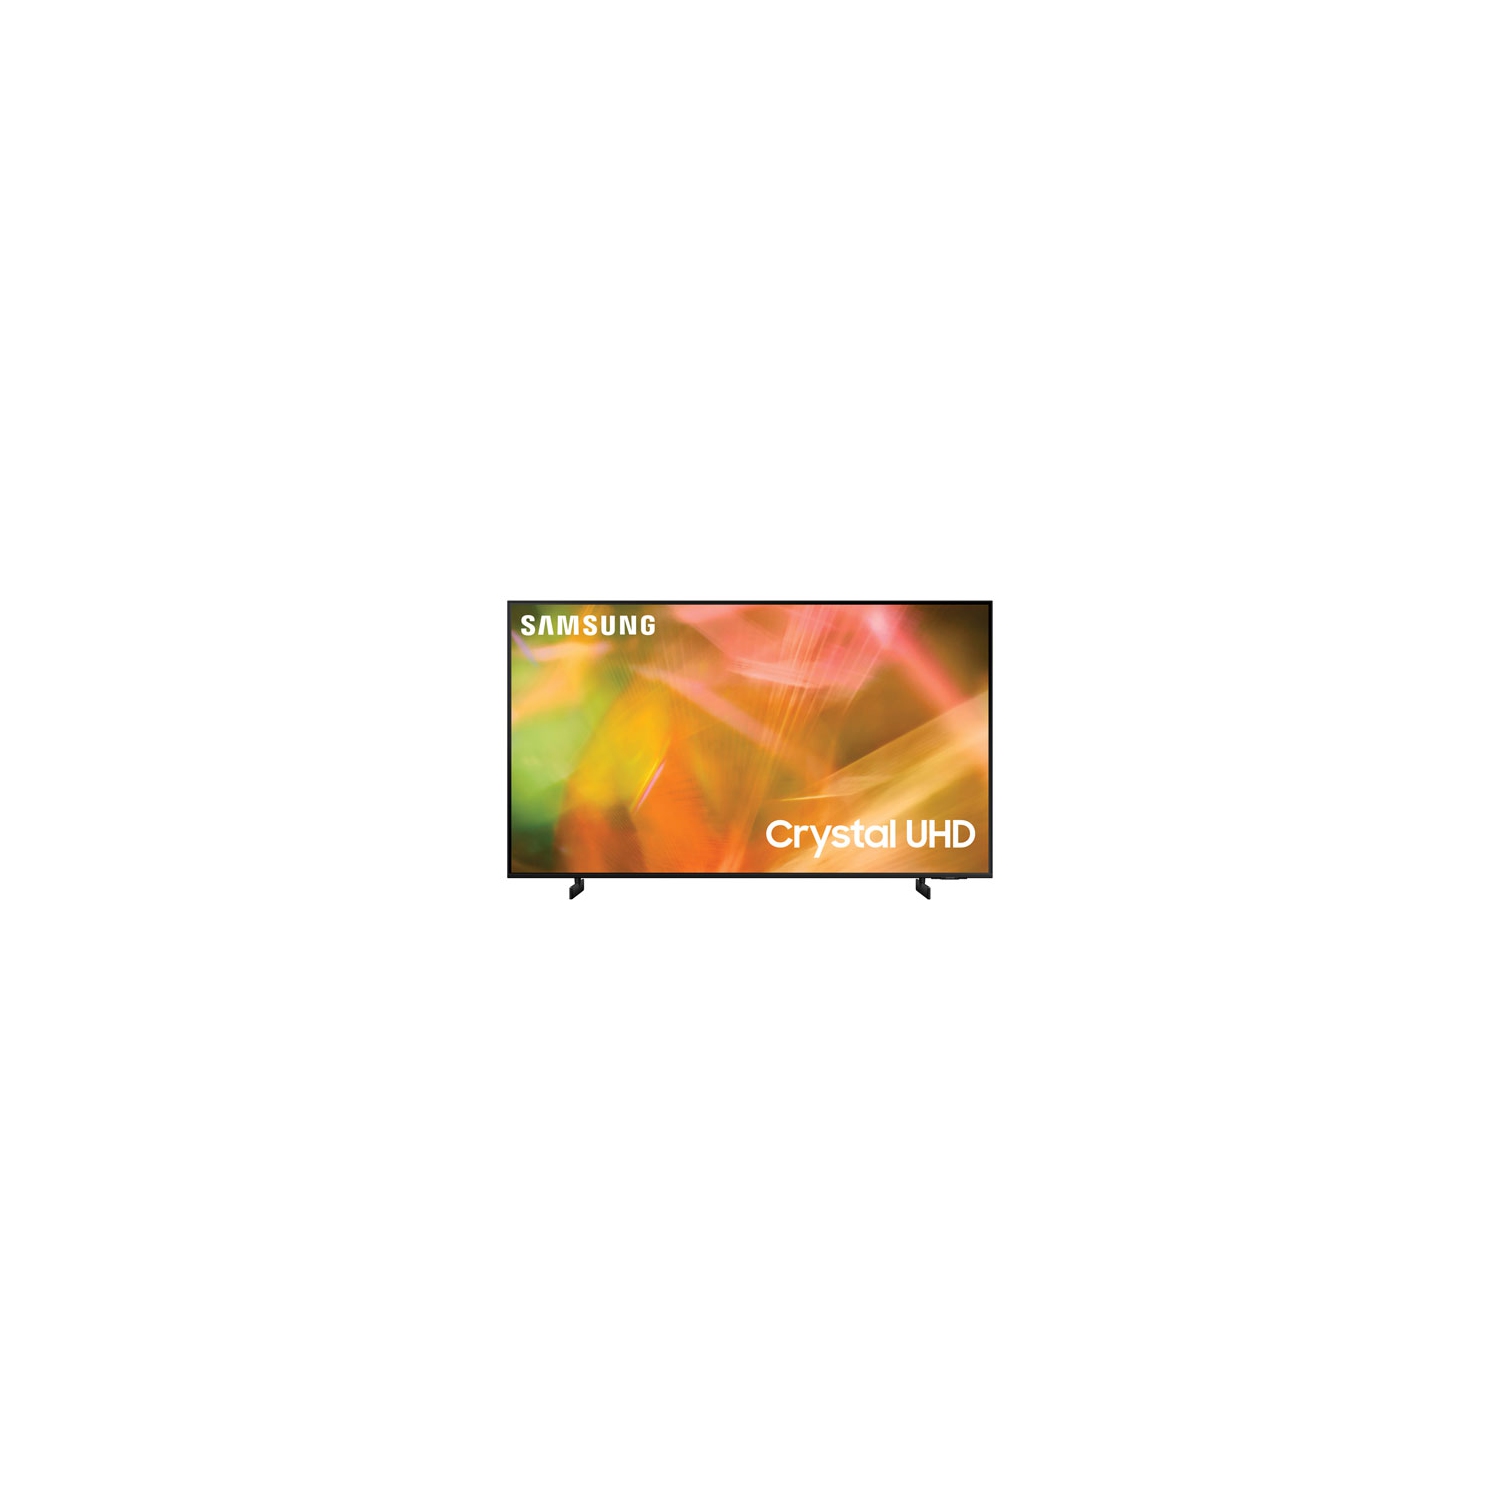 Samsung 55" OPEN BOX Crystal UHD Smart TV AU8000 (UN55AU8000) Brand New Condition With One Year Samsung Warranty